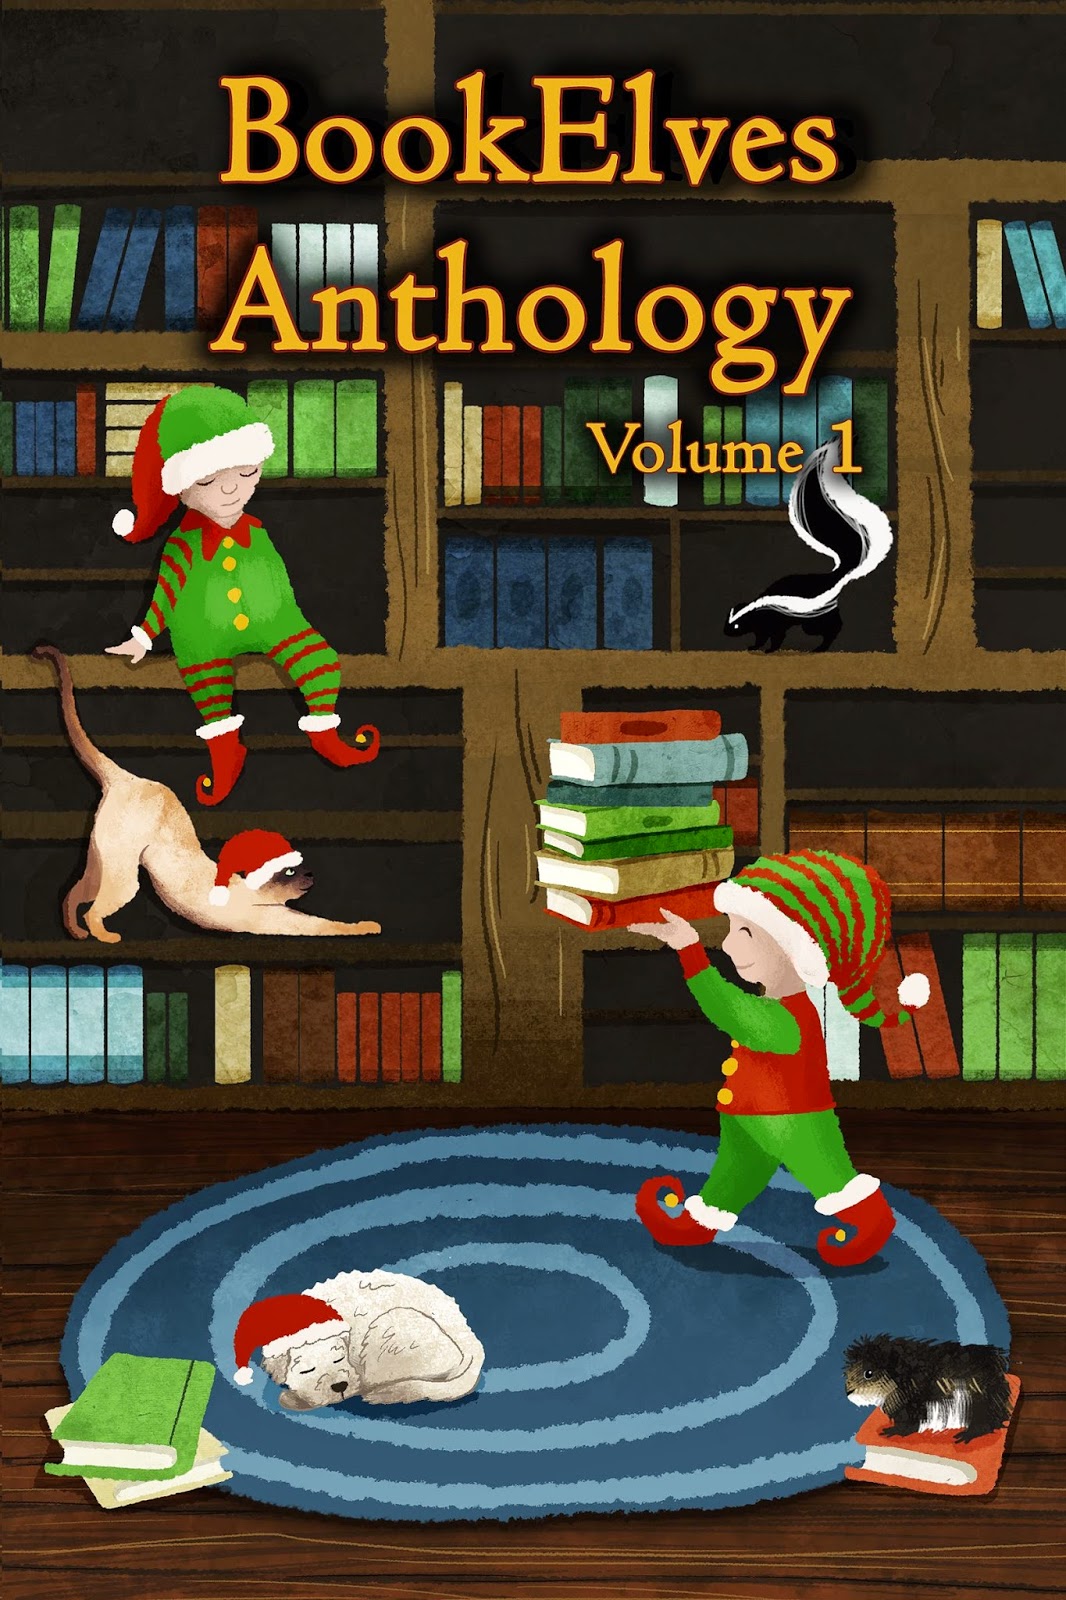 BookElves Anthology